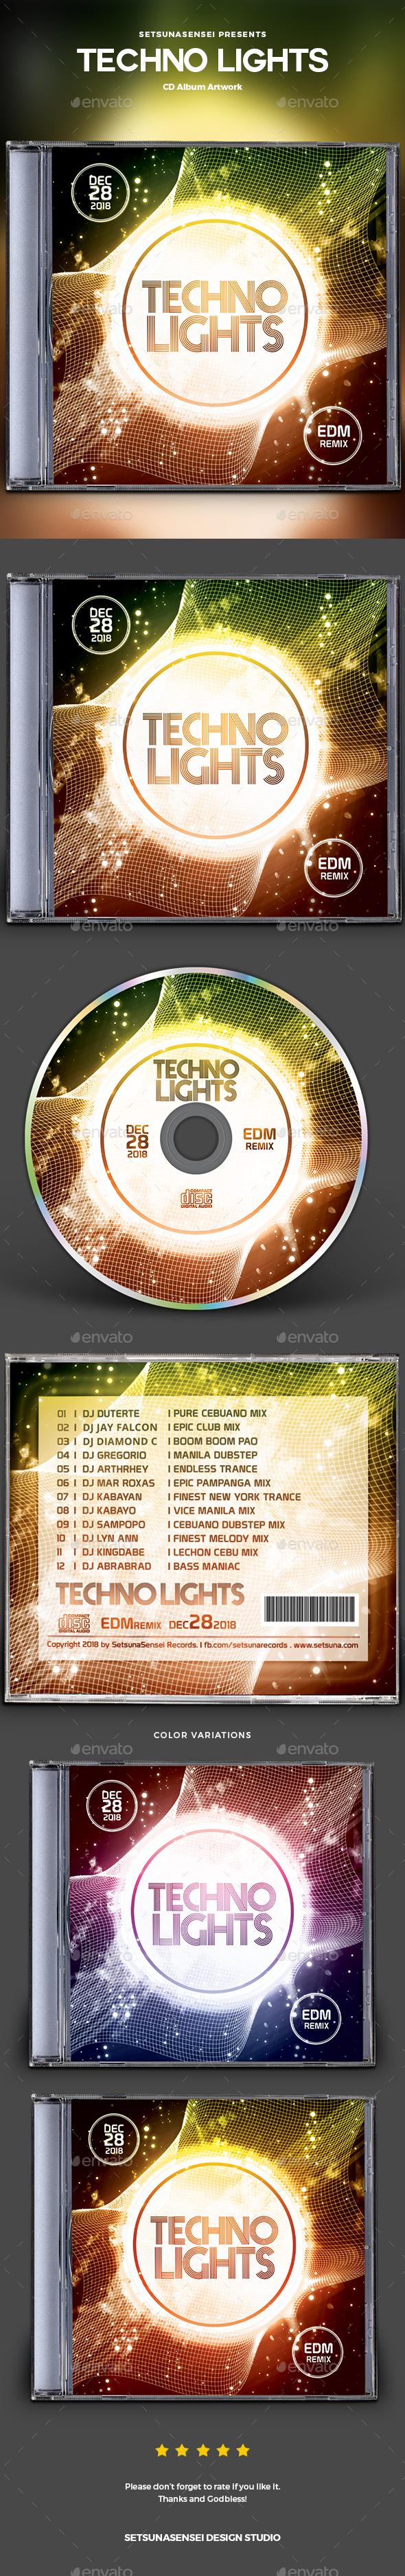  Techno Lights CD Album Artwork 